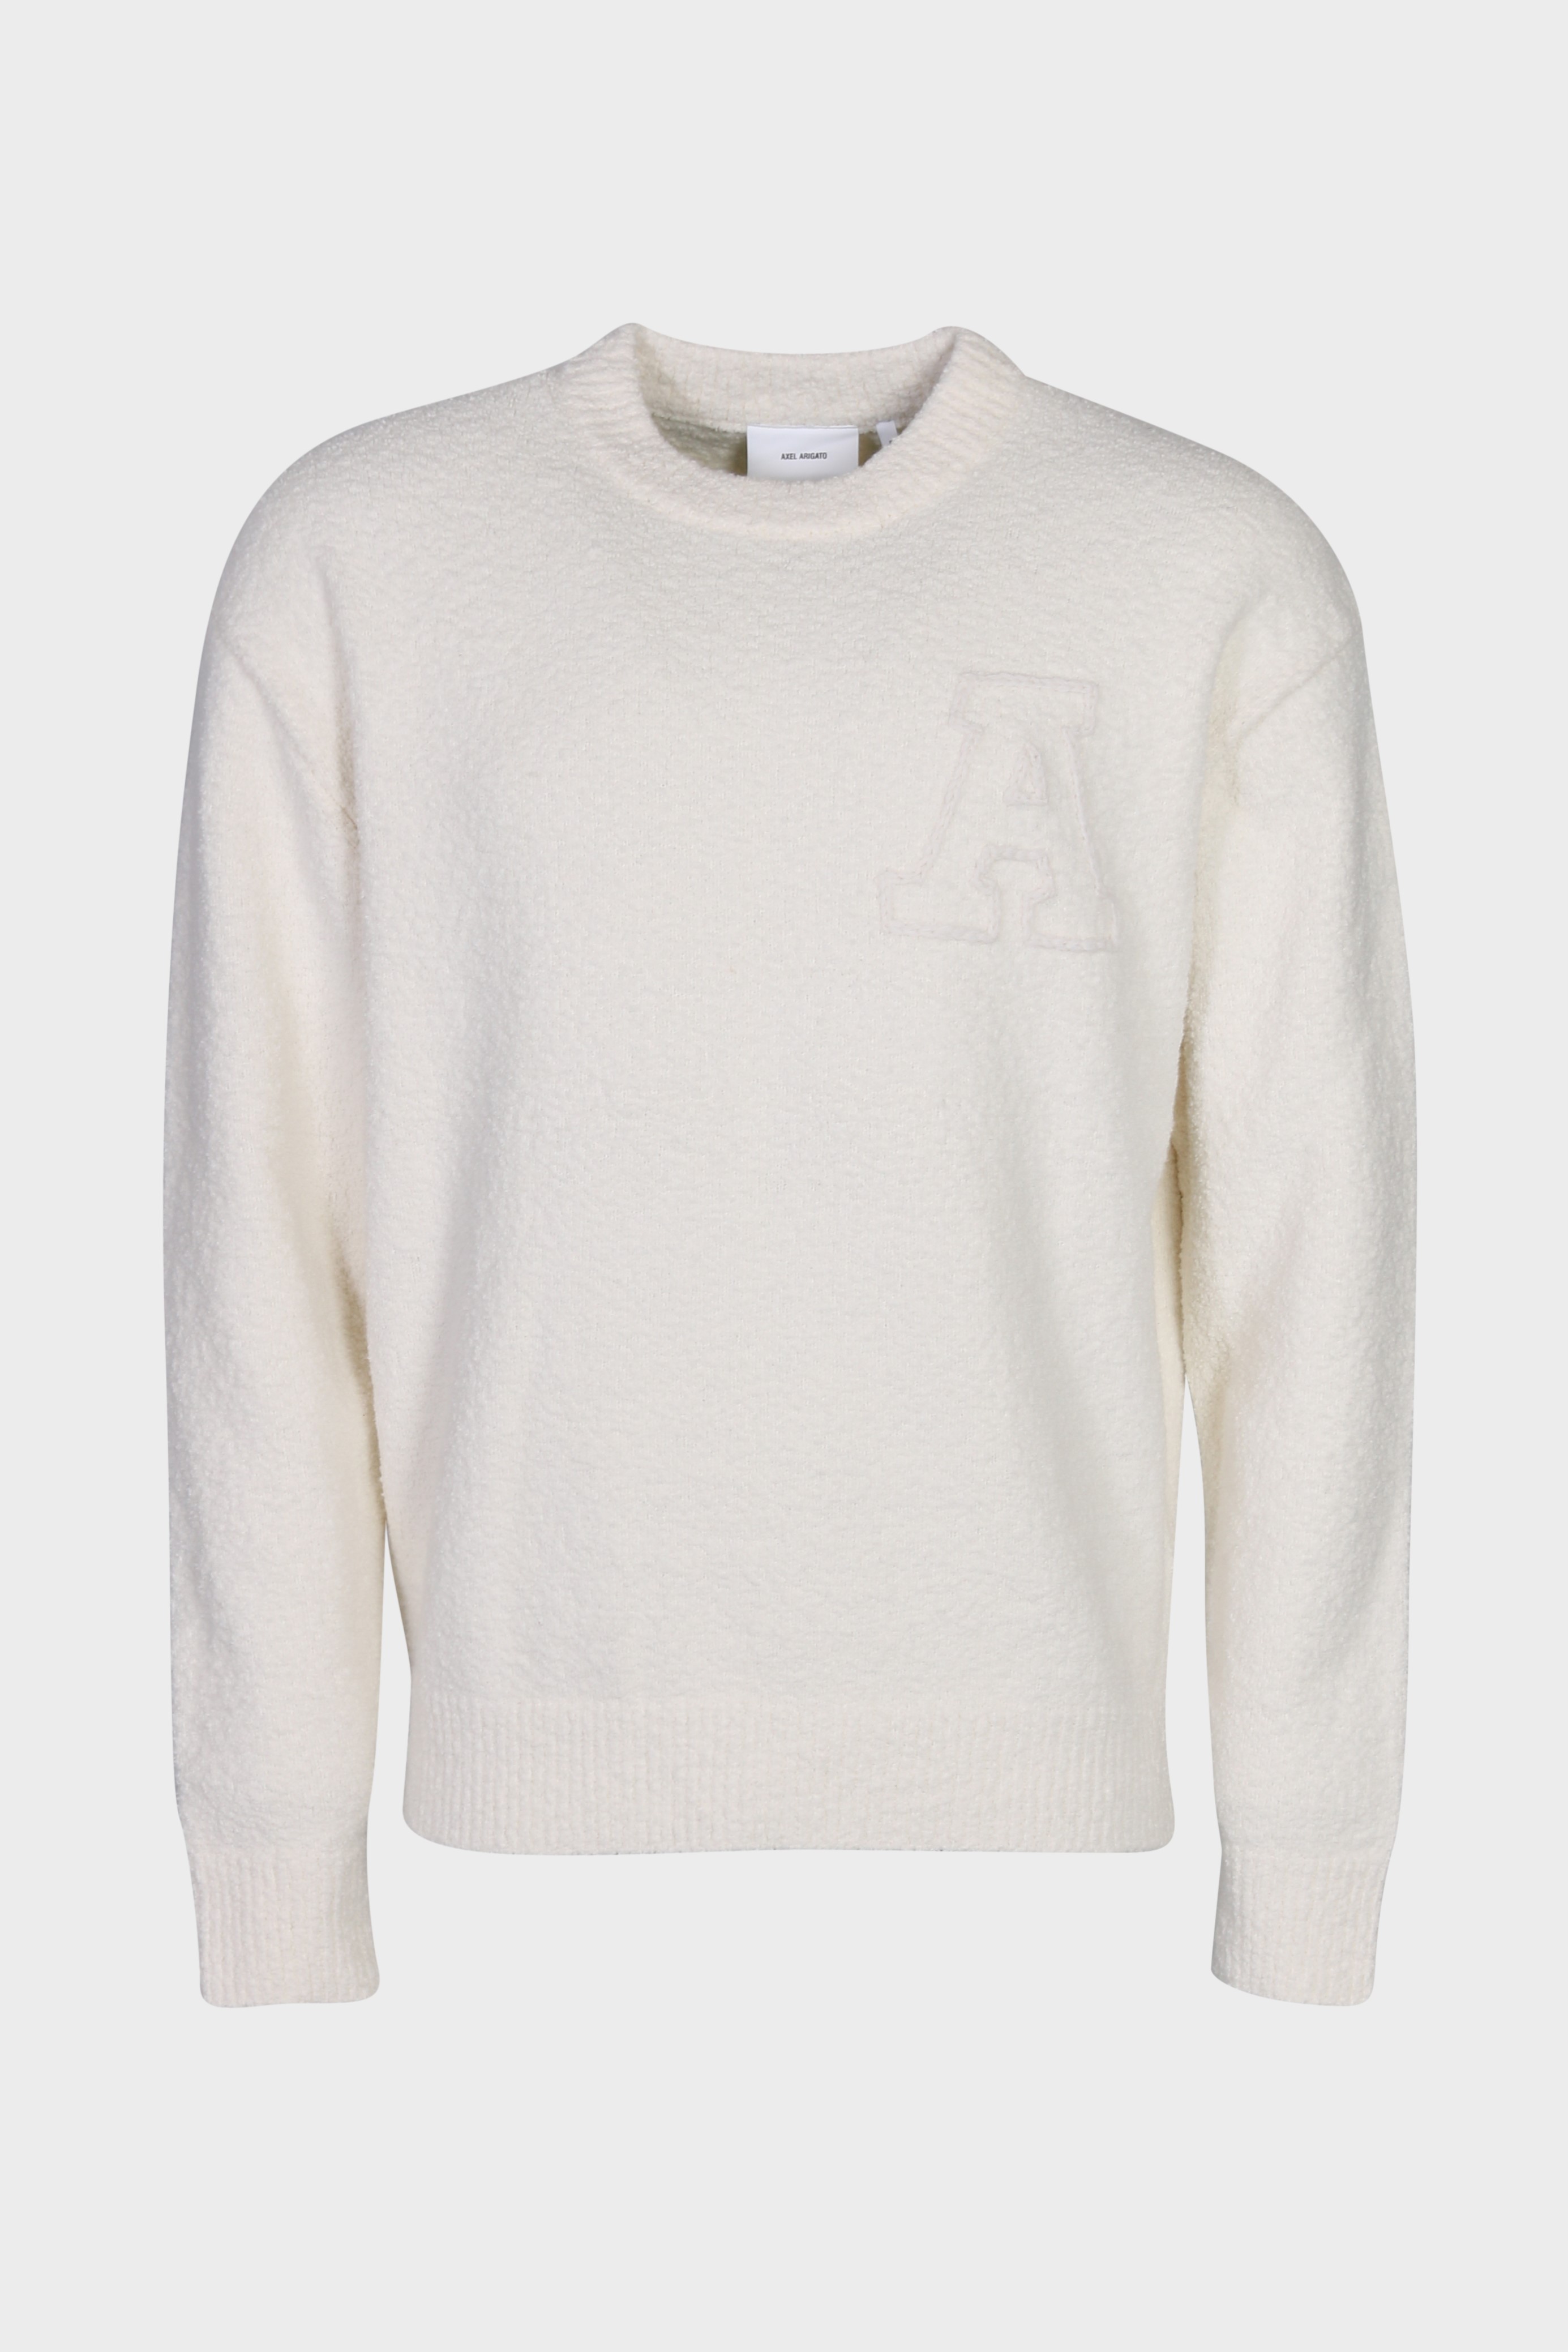 AXEL ARIGATO Radar Knit Sweater in Off White M